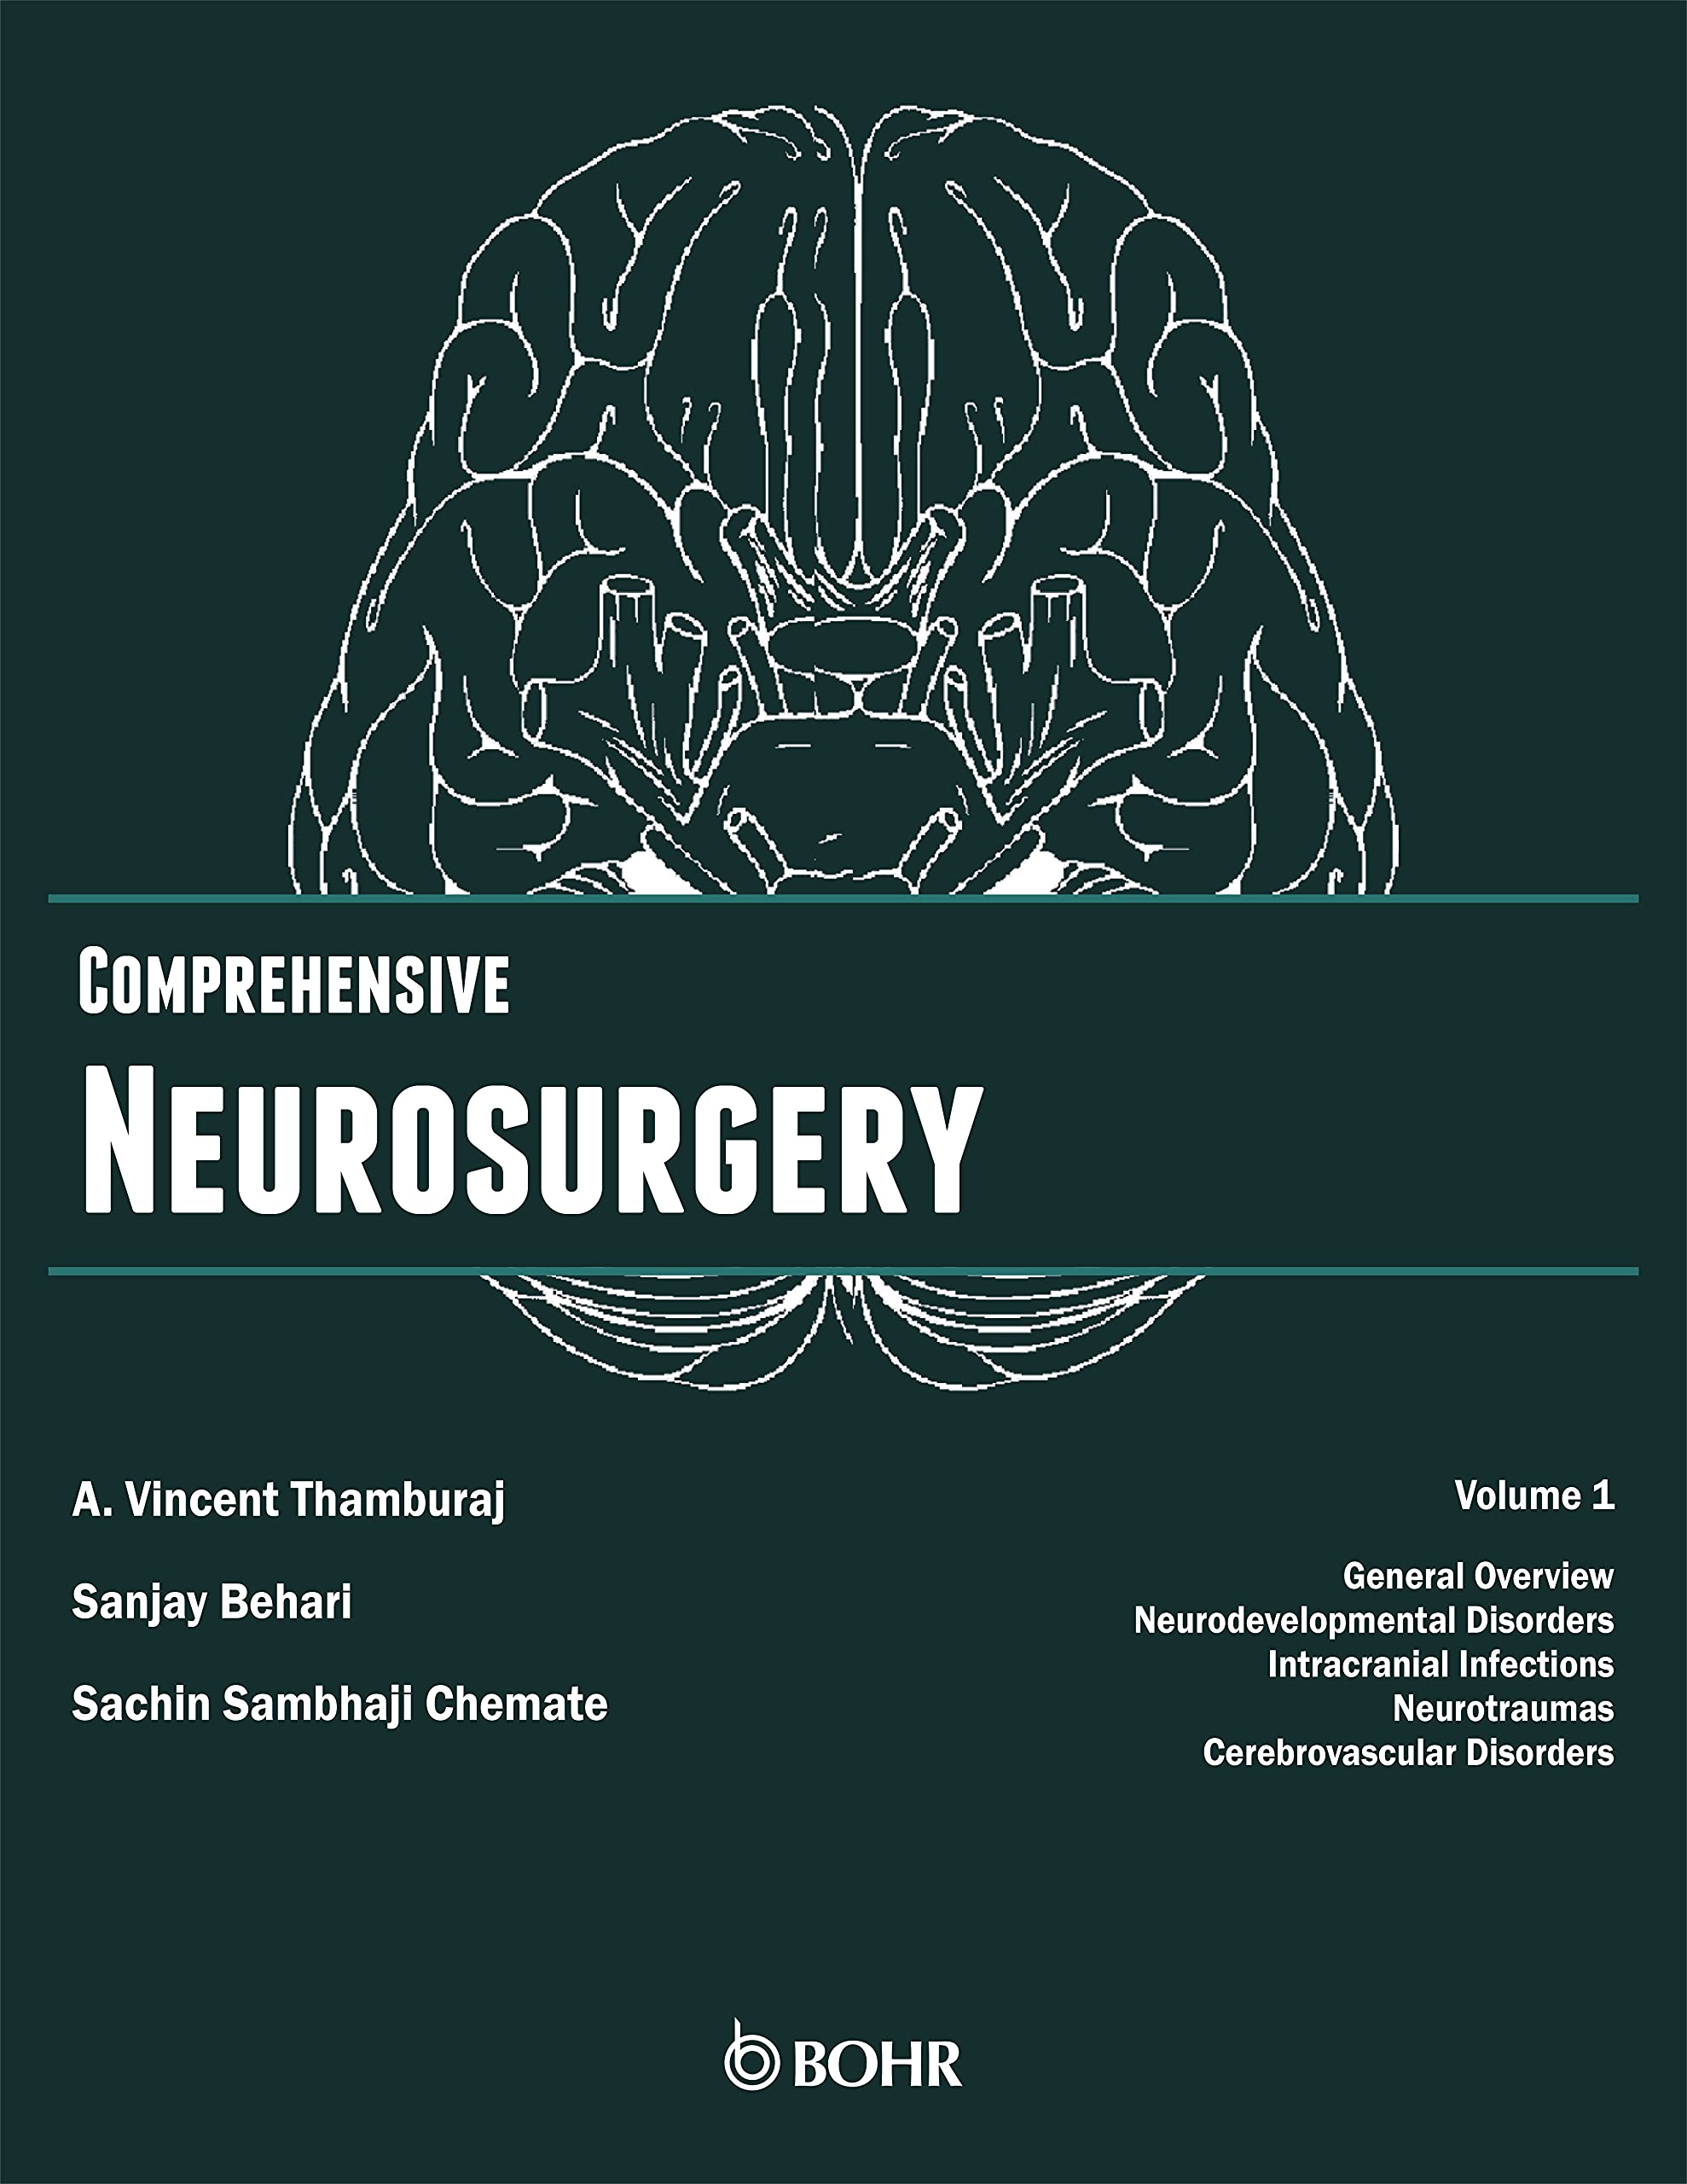 Comprehensive Neurosurgery (Volume I)